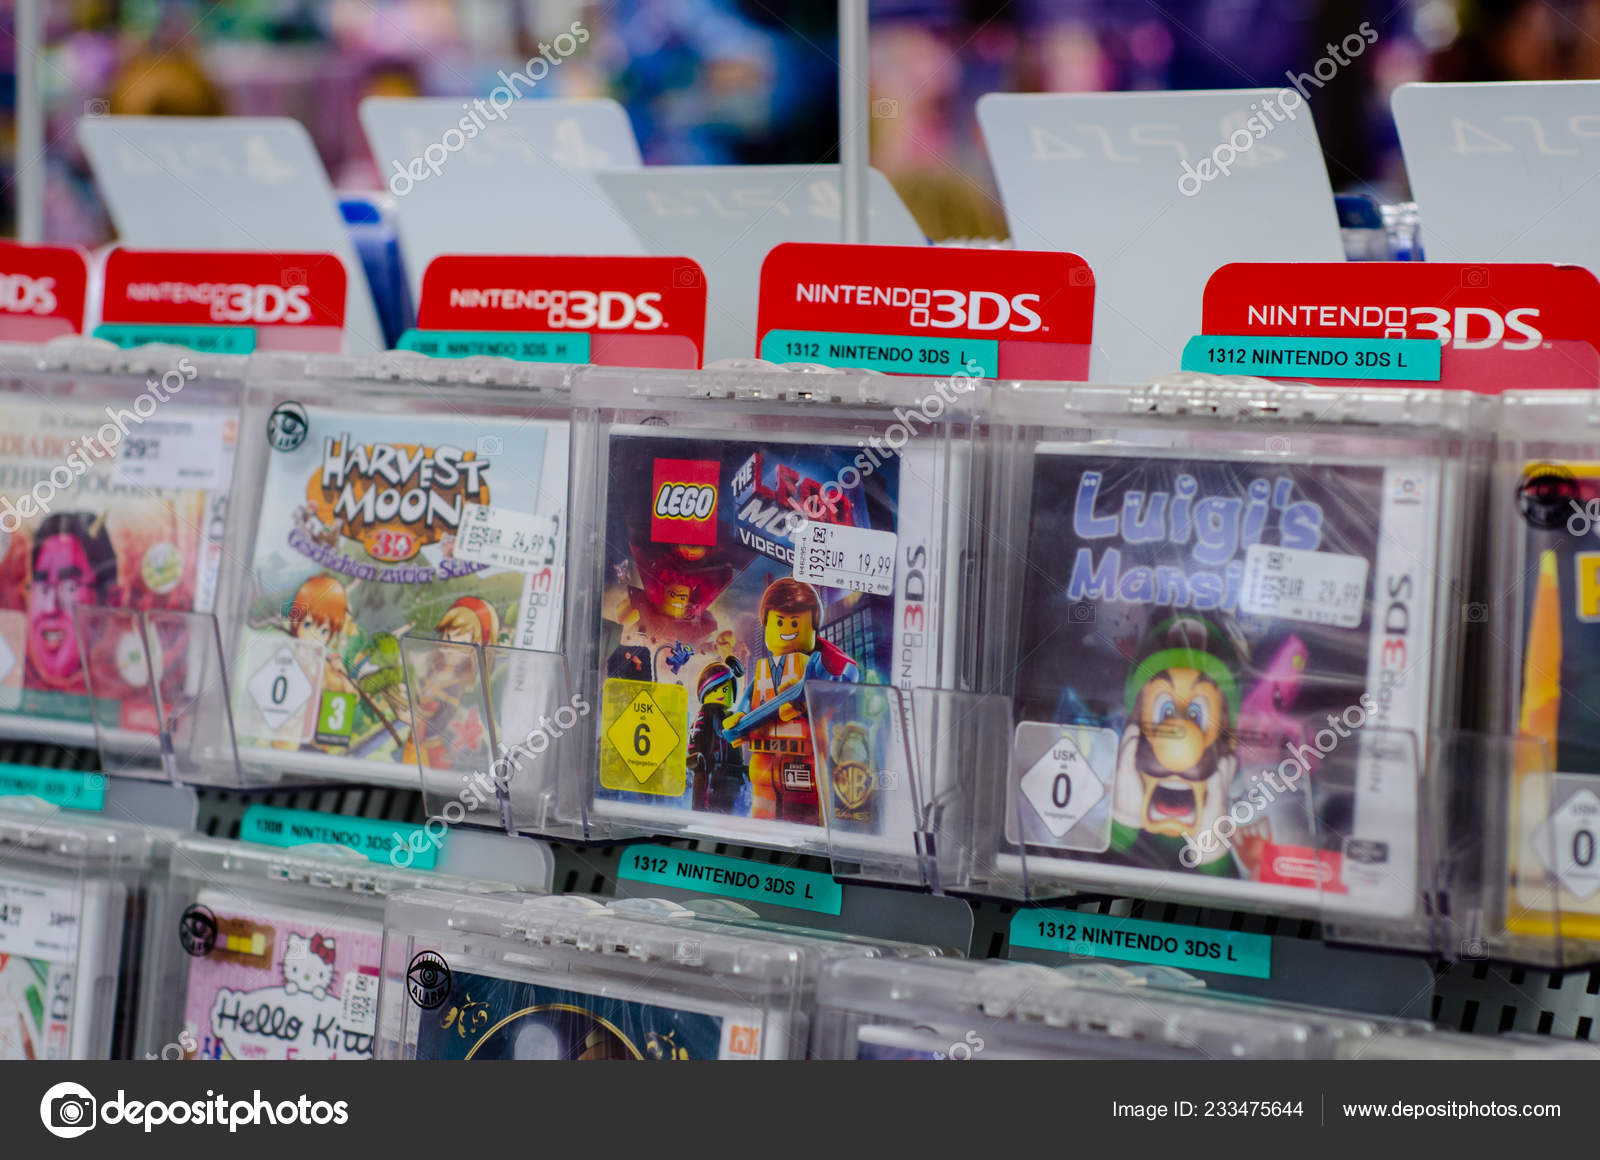 Nintendo 3ds Stock Photos, Royalty Free Nintendo 3ds Images | Depositphotos